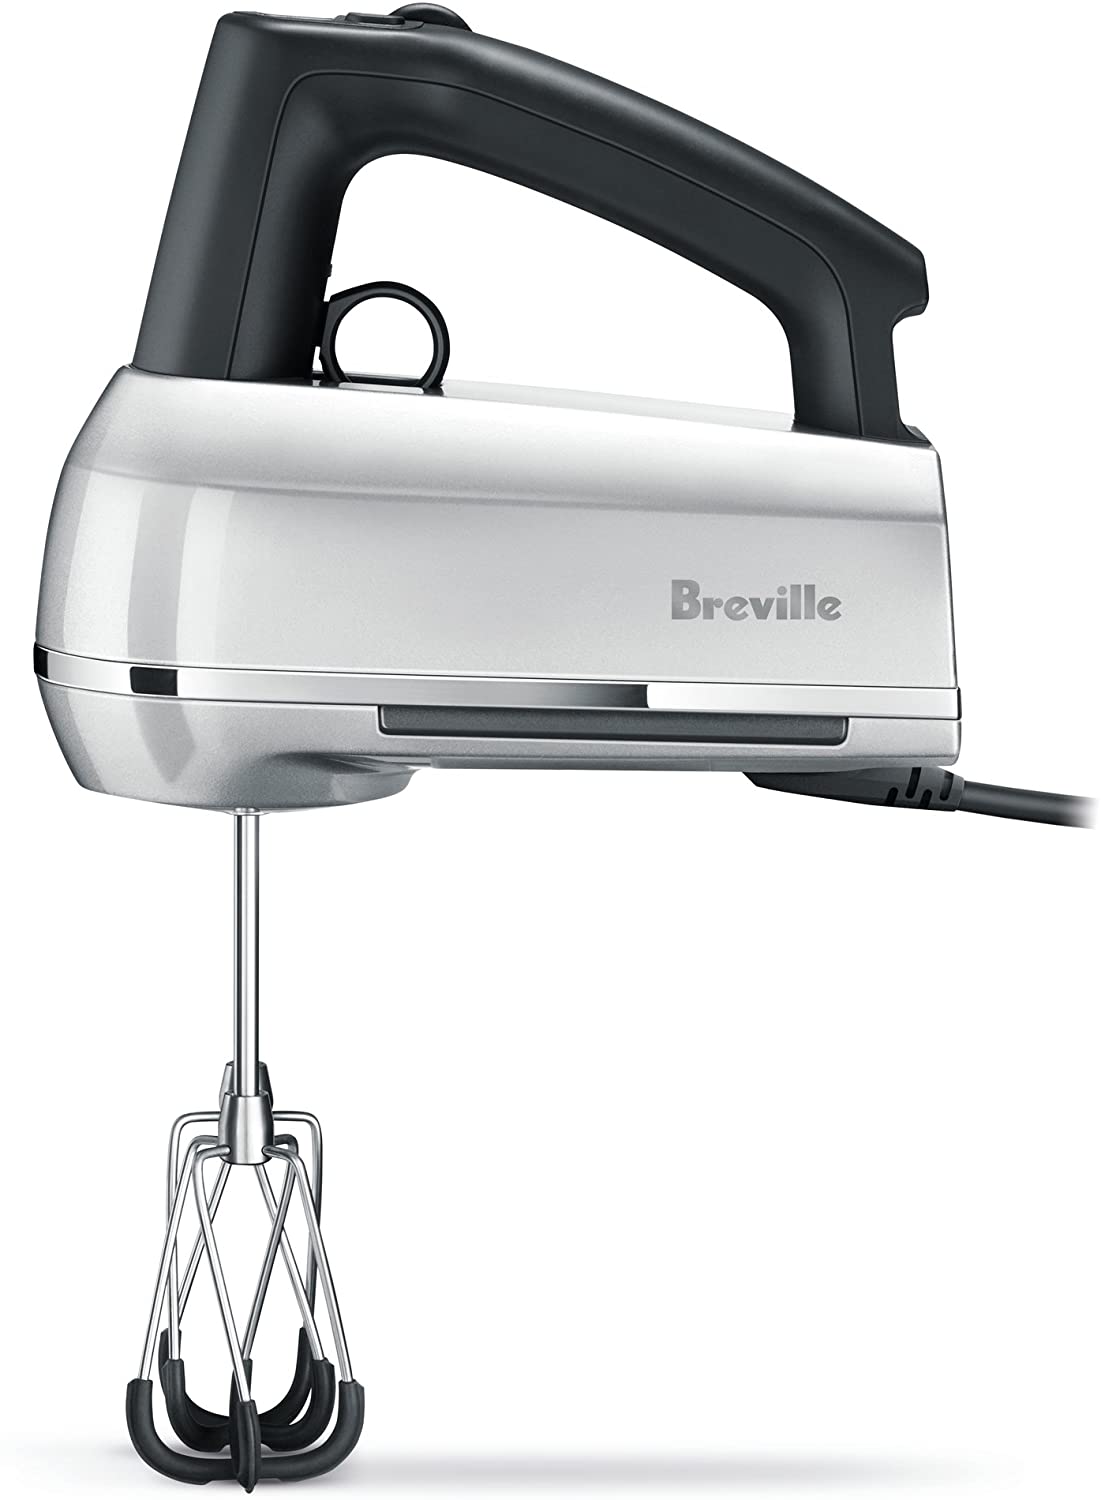 Breville Handy Mix Scraper Hand Mixer, Silver, BHM800SIL - image 1 of 7